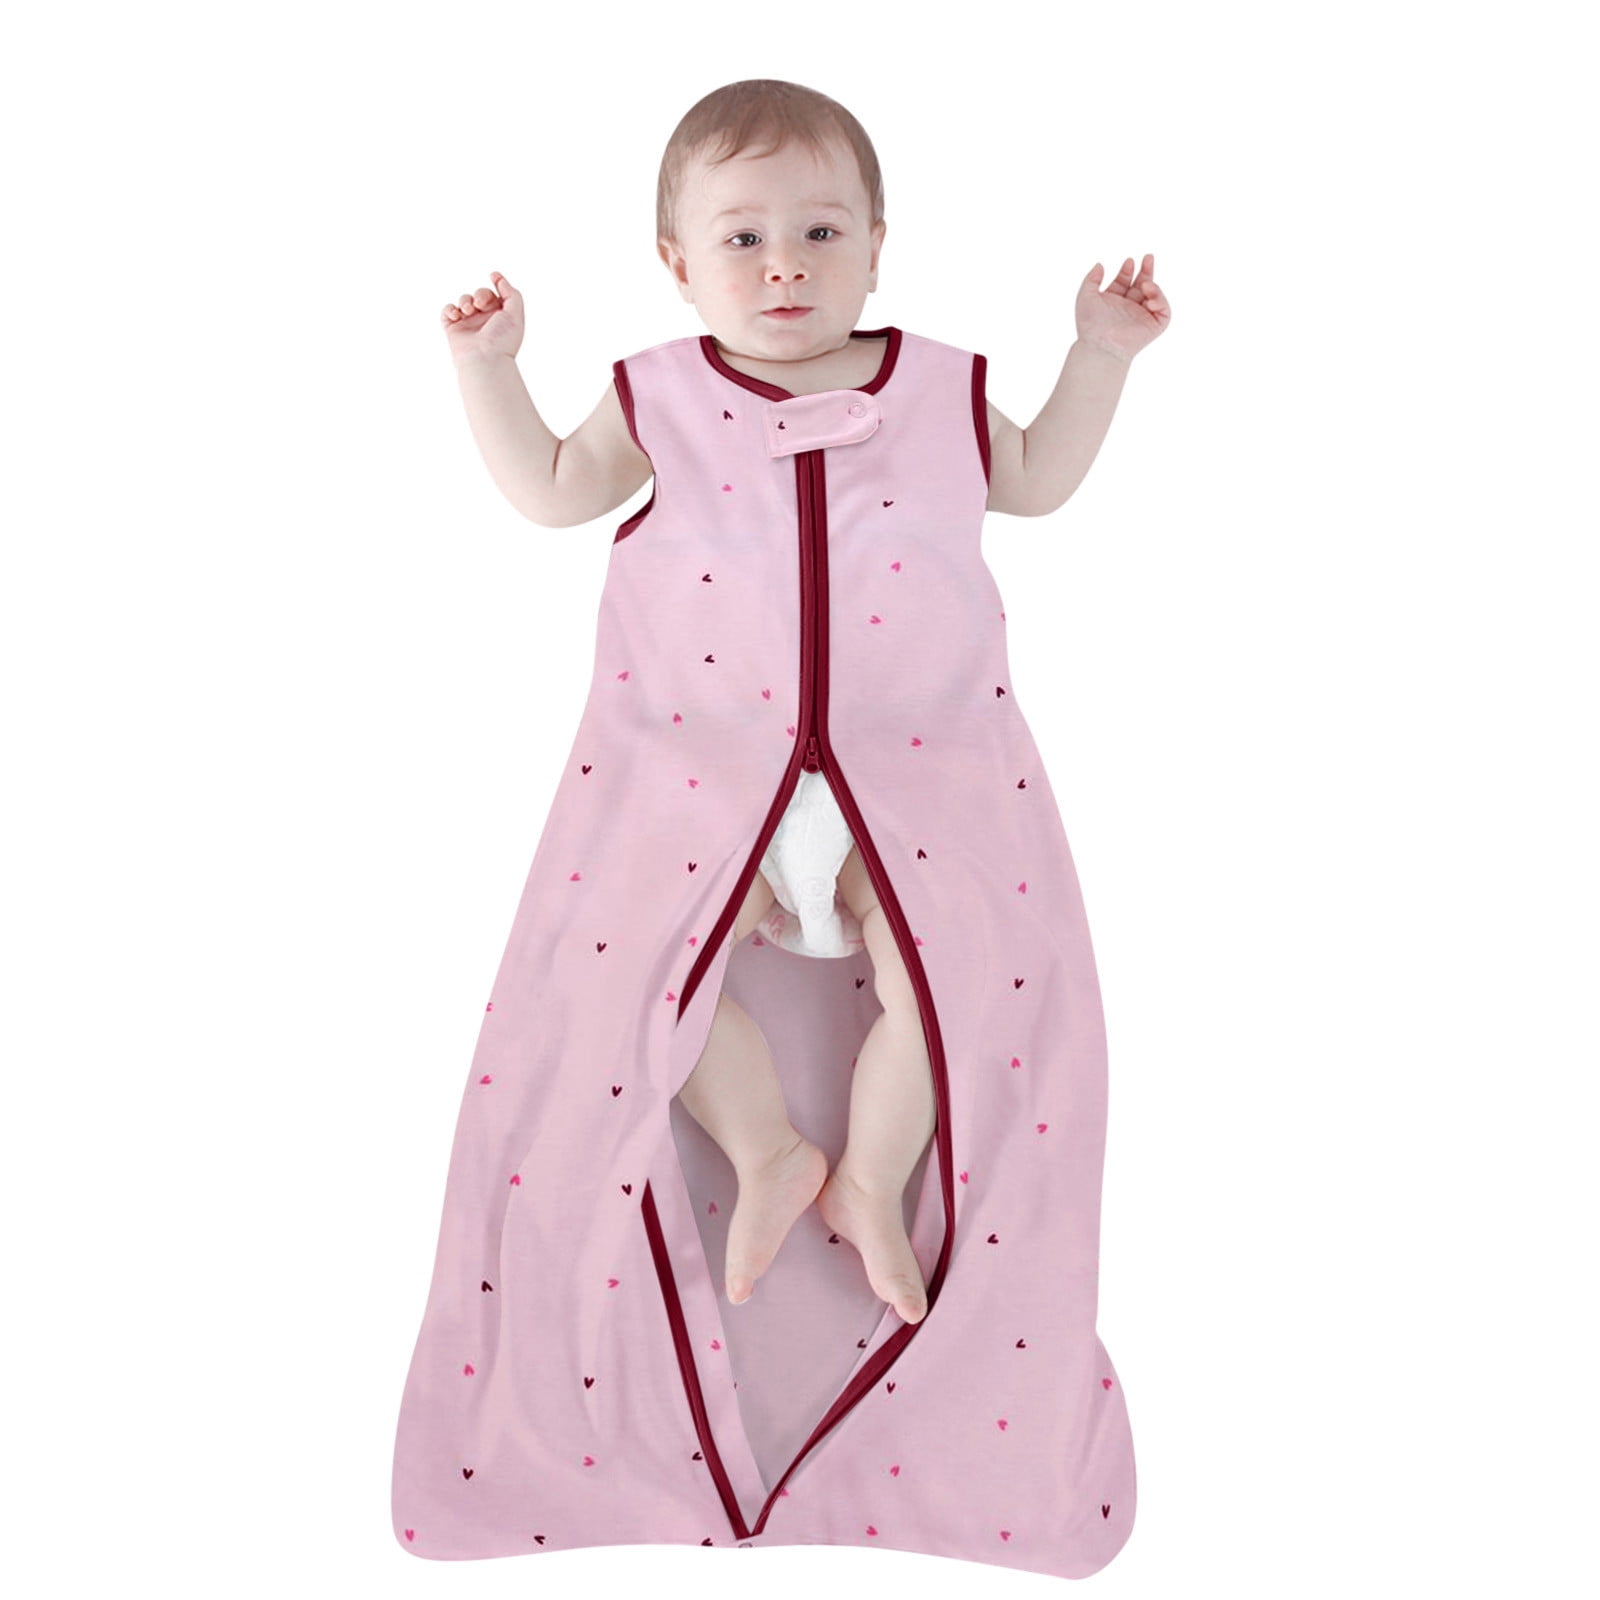 Chickpea Baby Infant Gender Neutral Unisex 2pk Muslin Blankets, Size: 0-12m